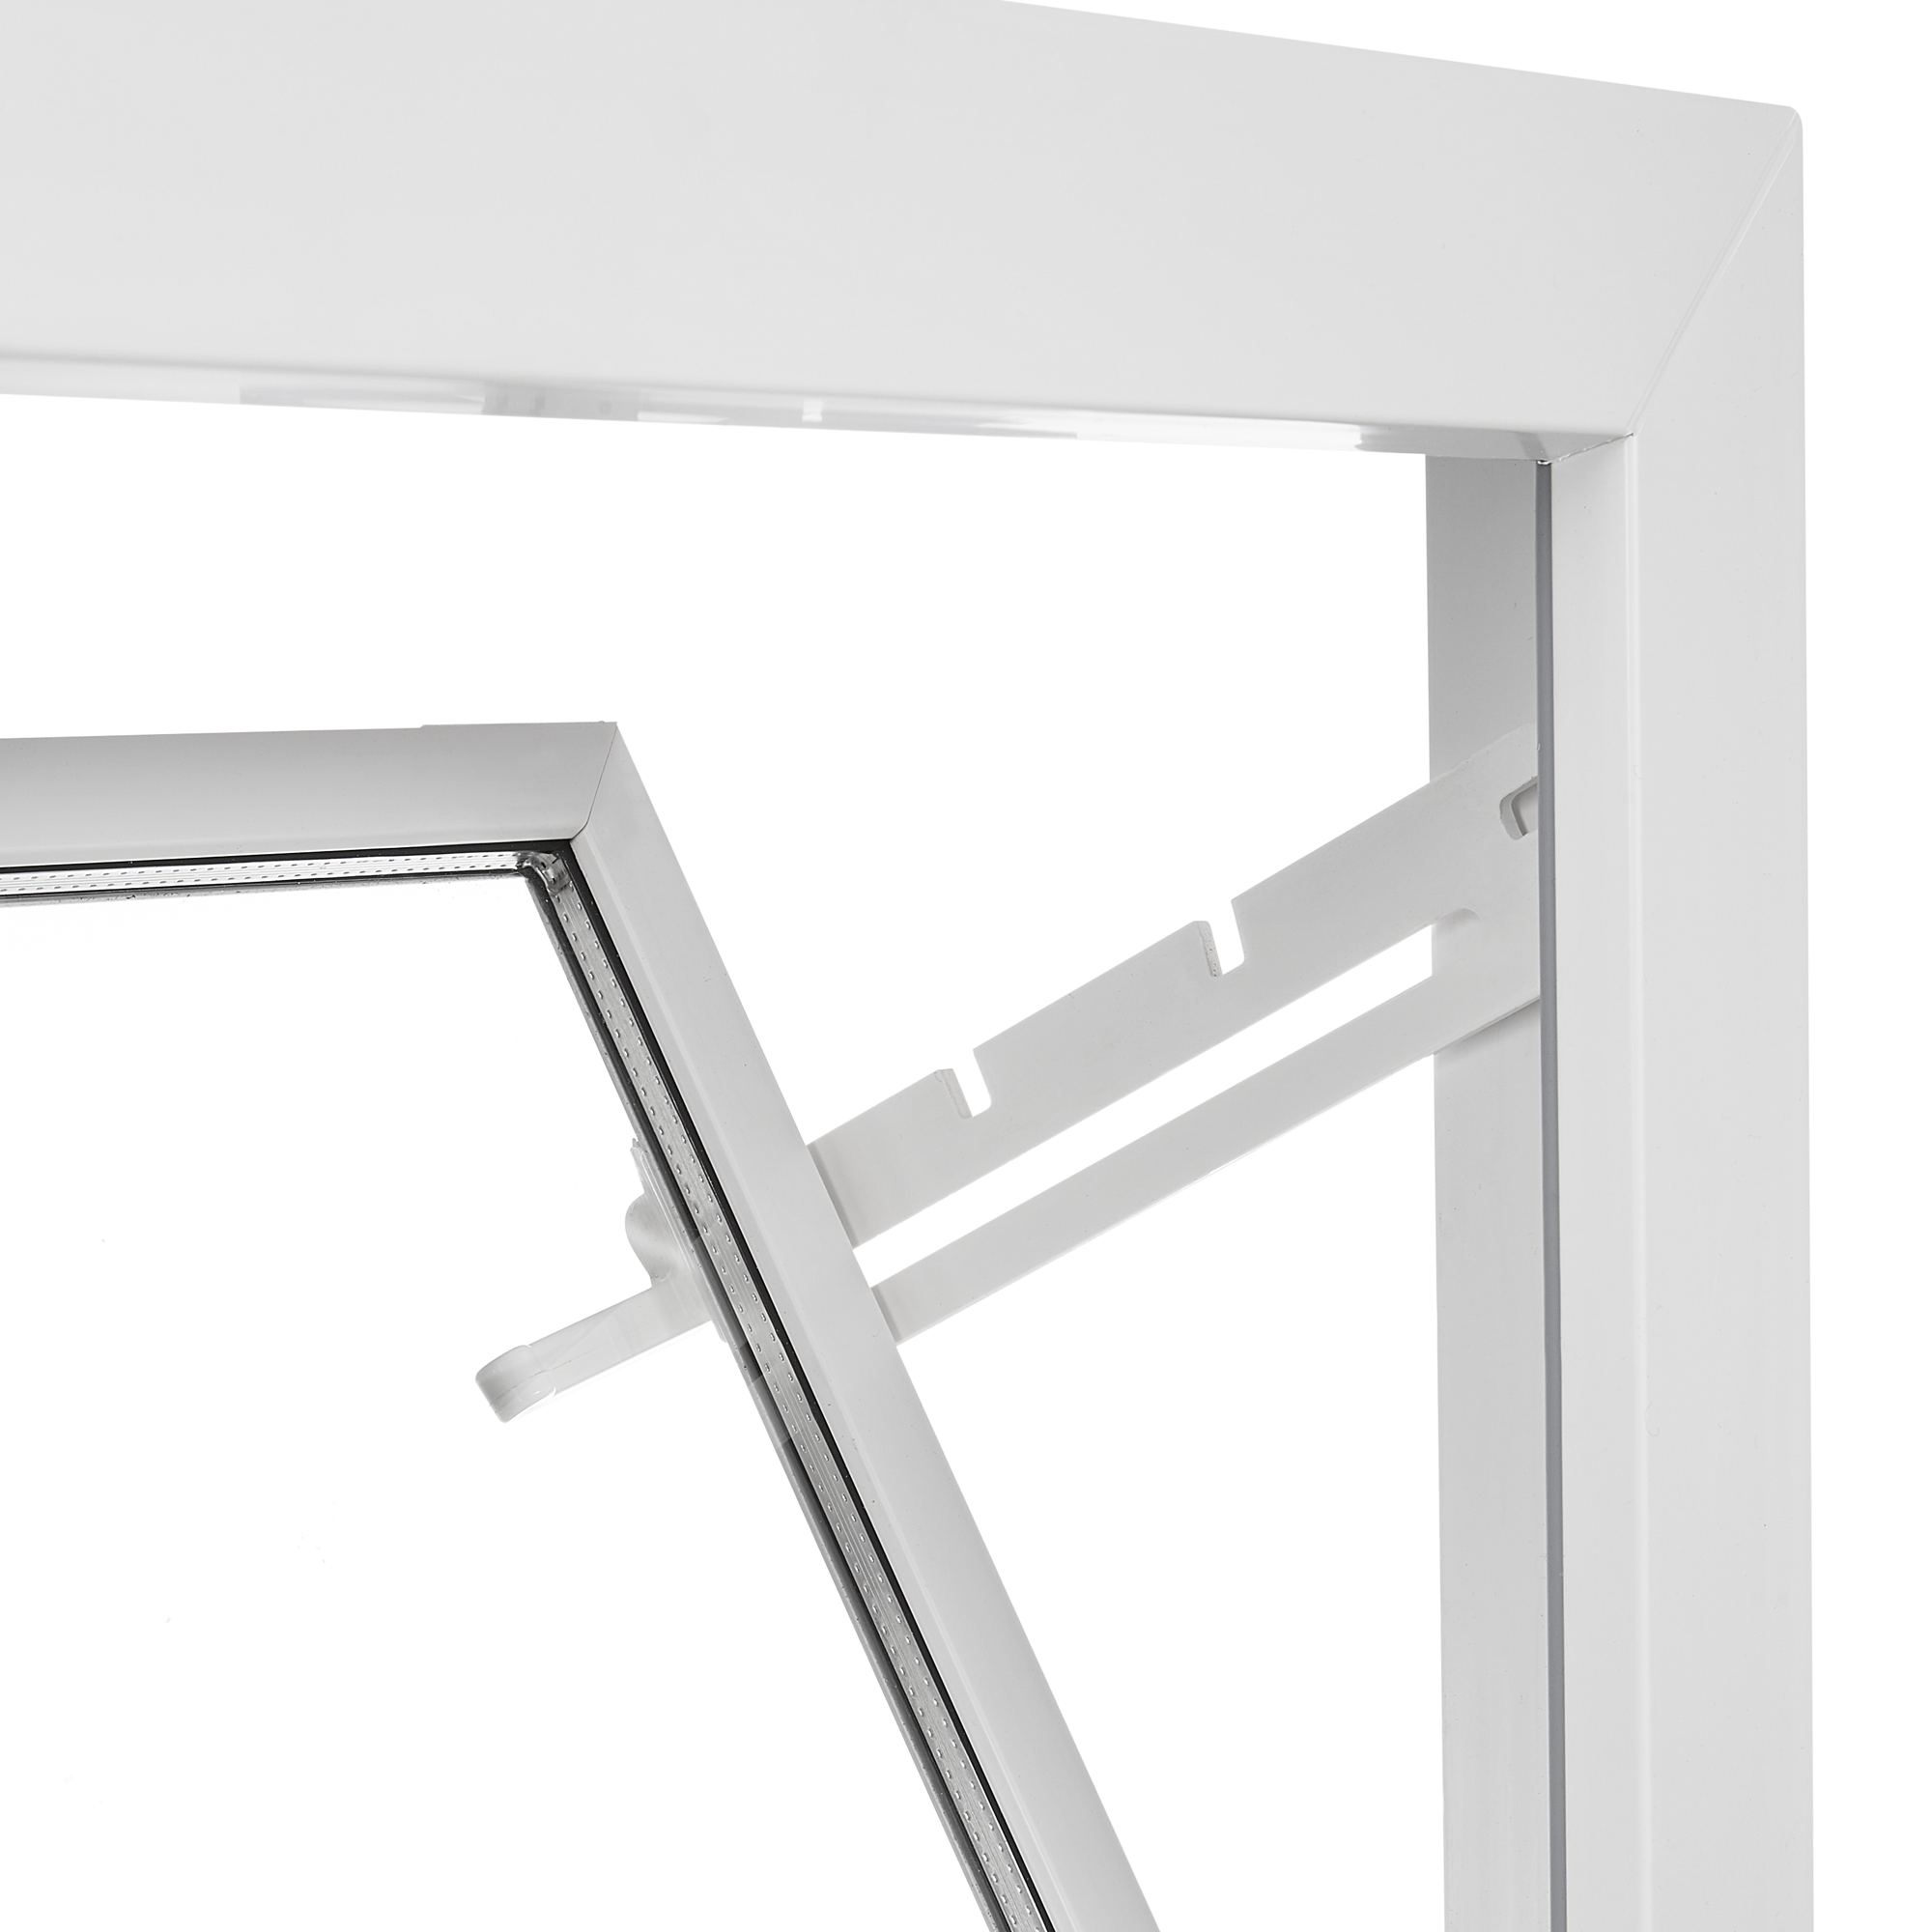 Kippfenster weiß 1-flügelig 80 x 40 cm + product picture